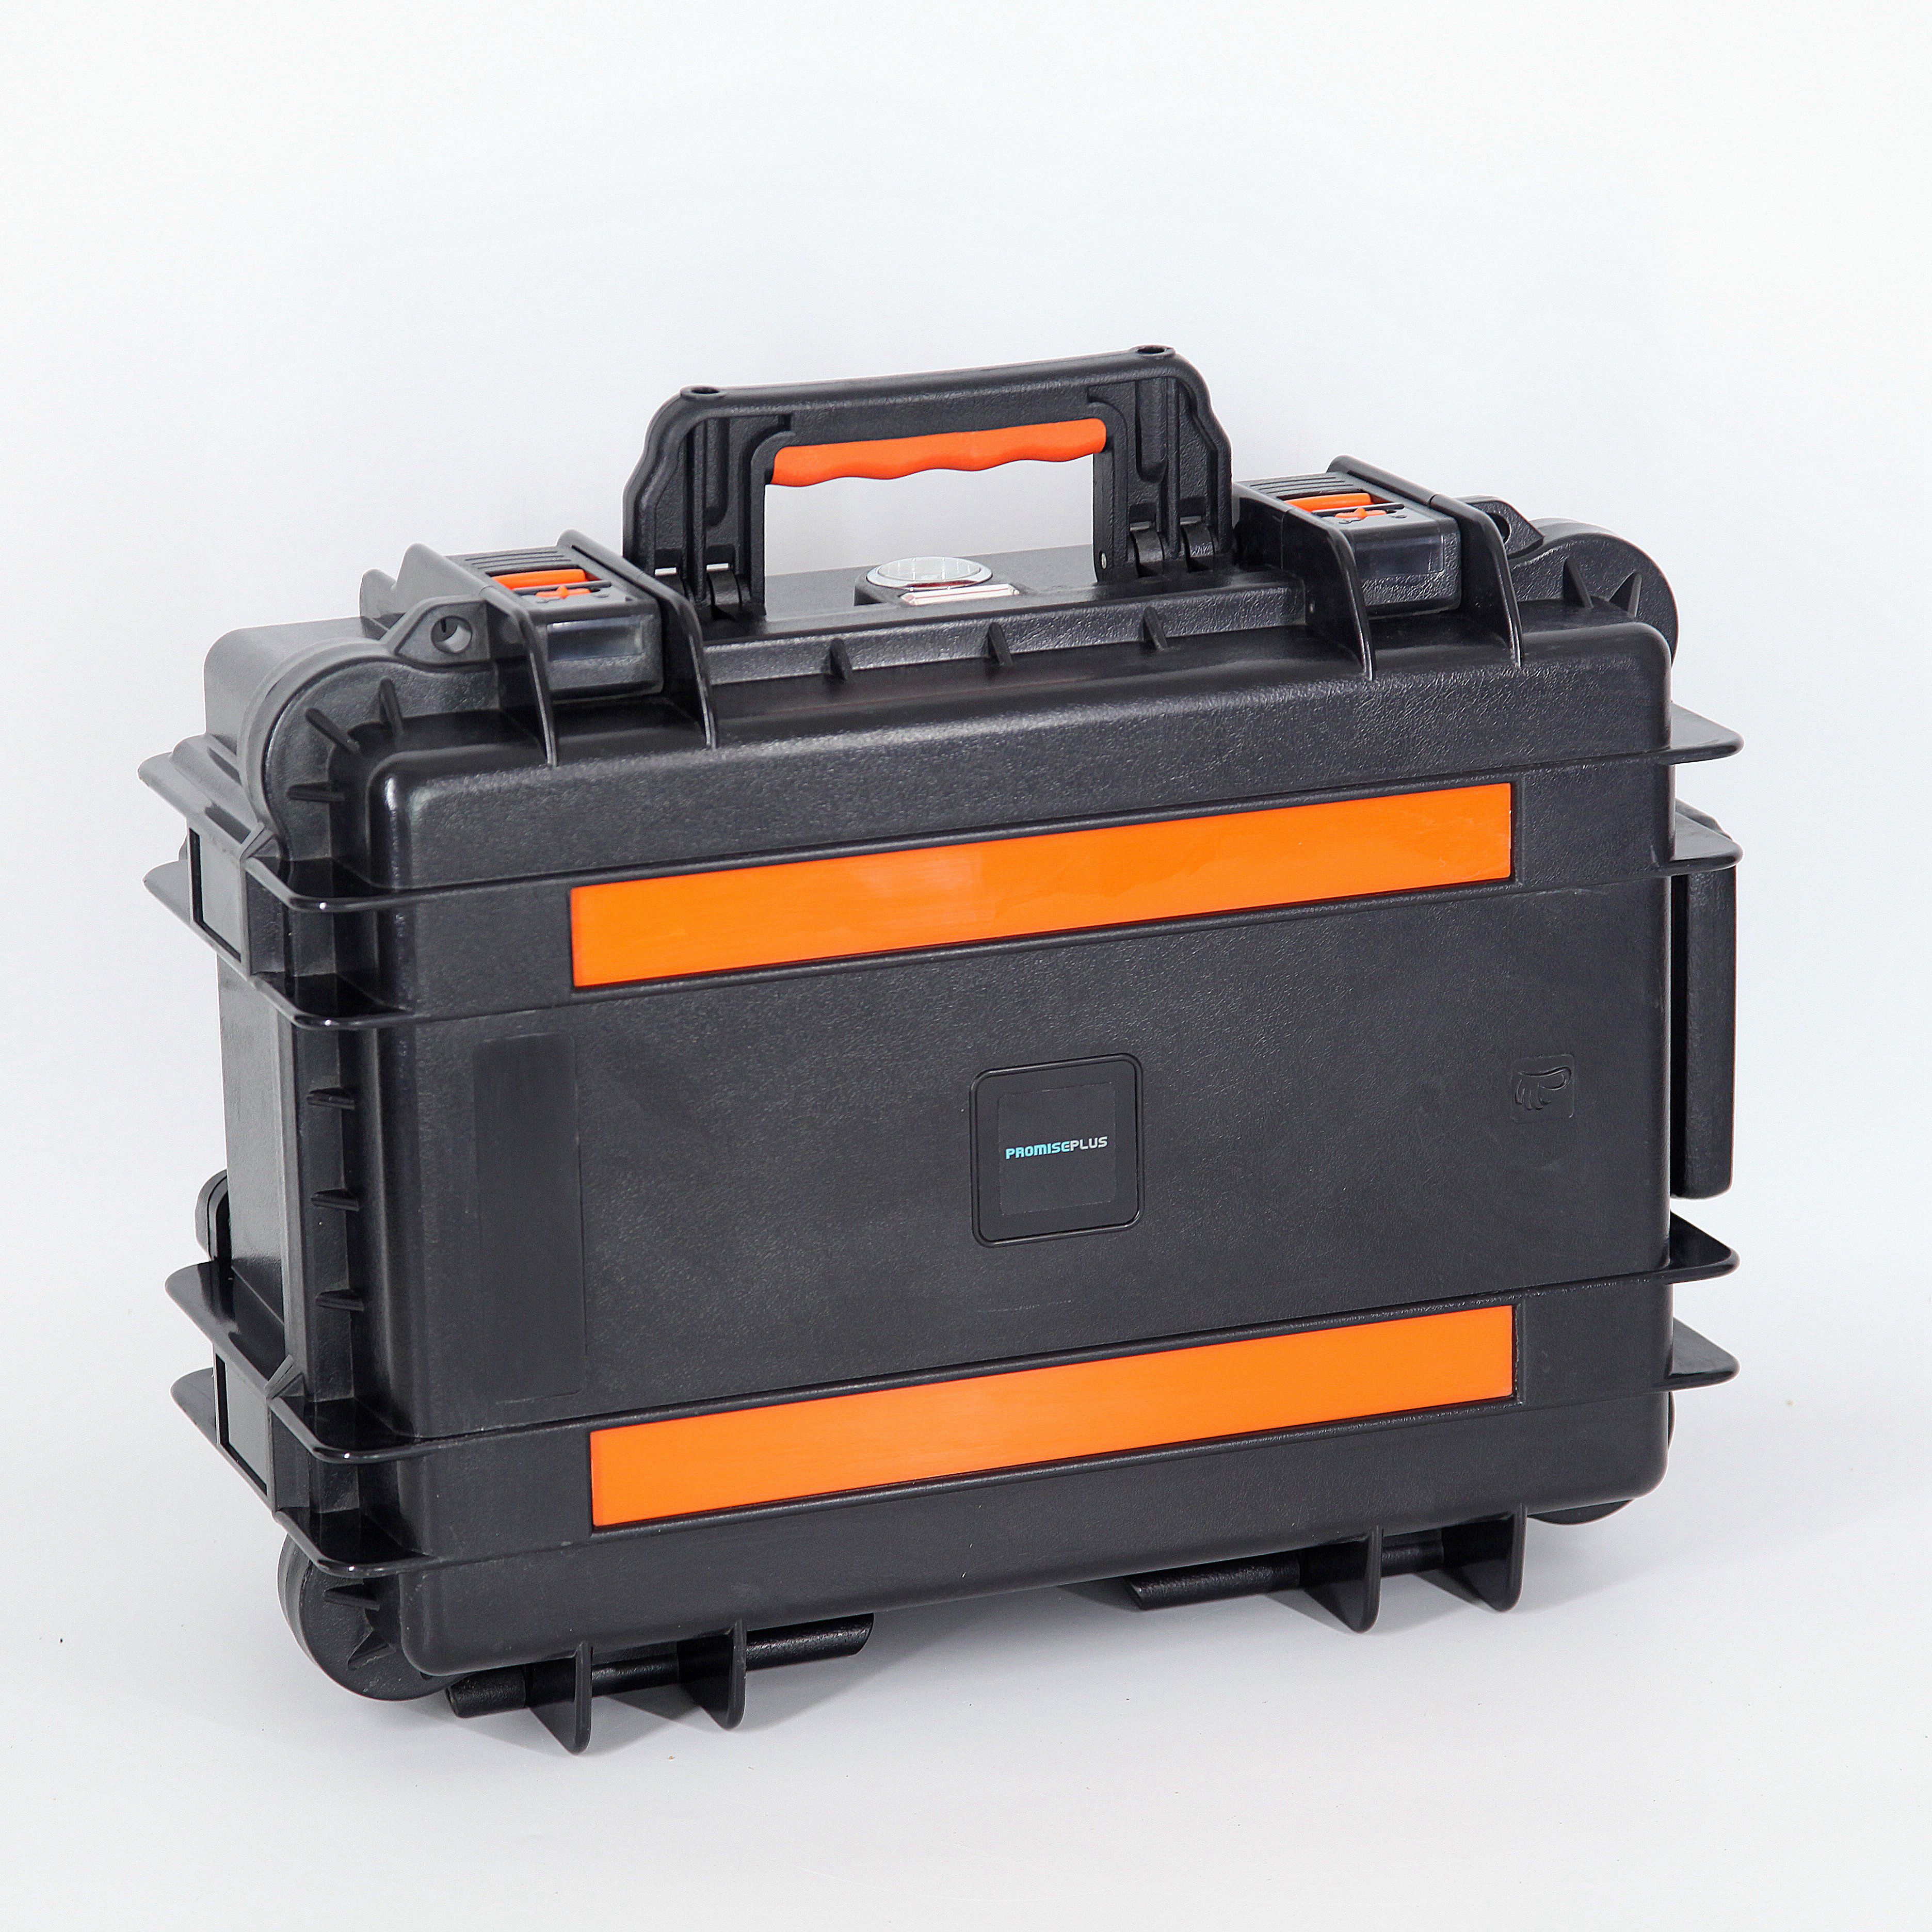 Waterproof Military Case Drone Dji Mabic 2 Por Cases Hard Plastic Box with Custom Foam